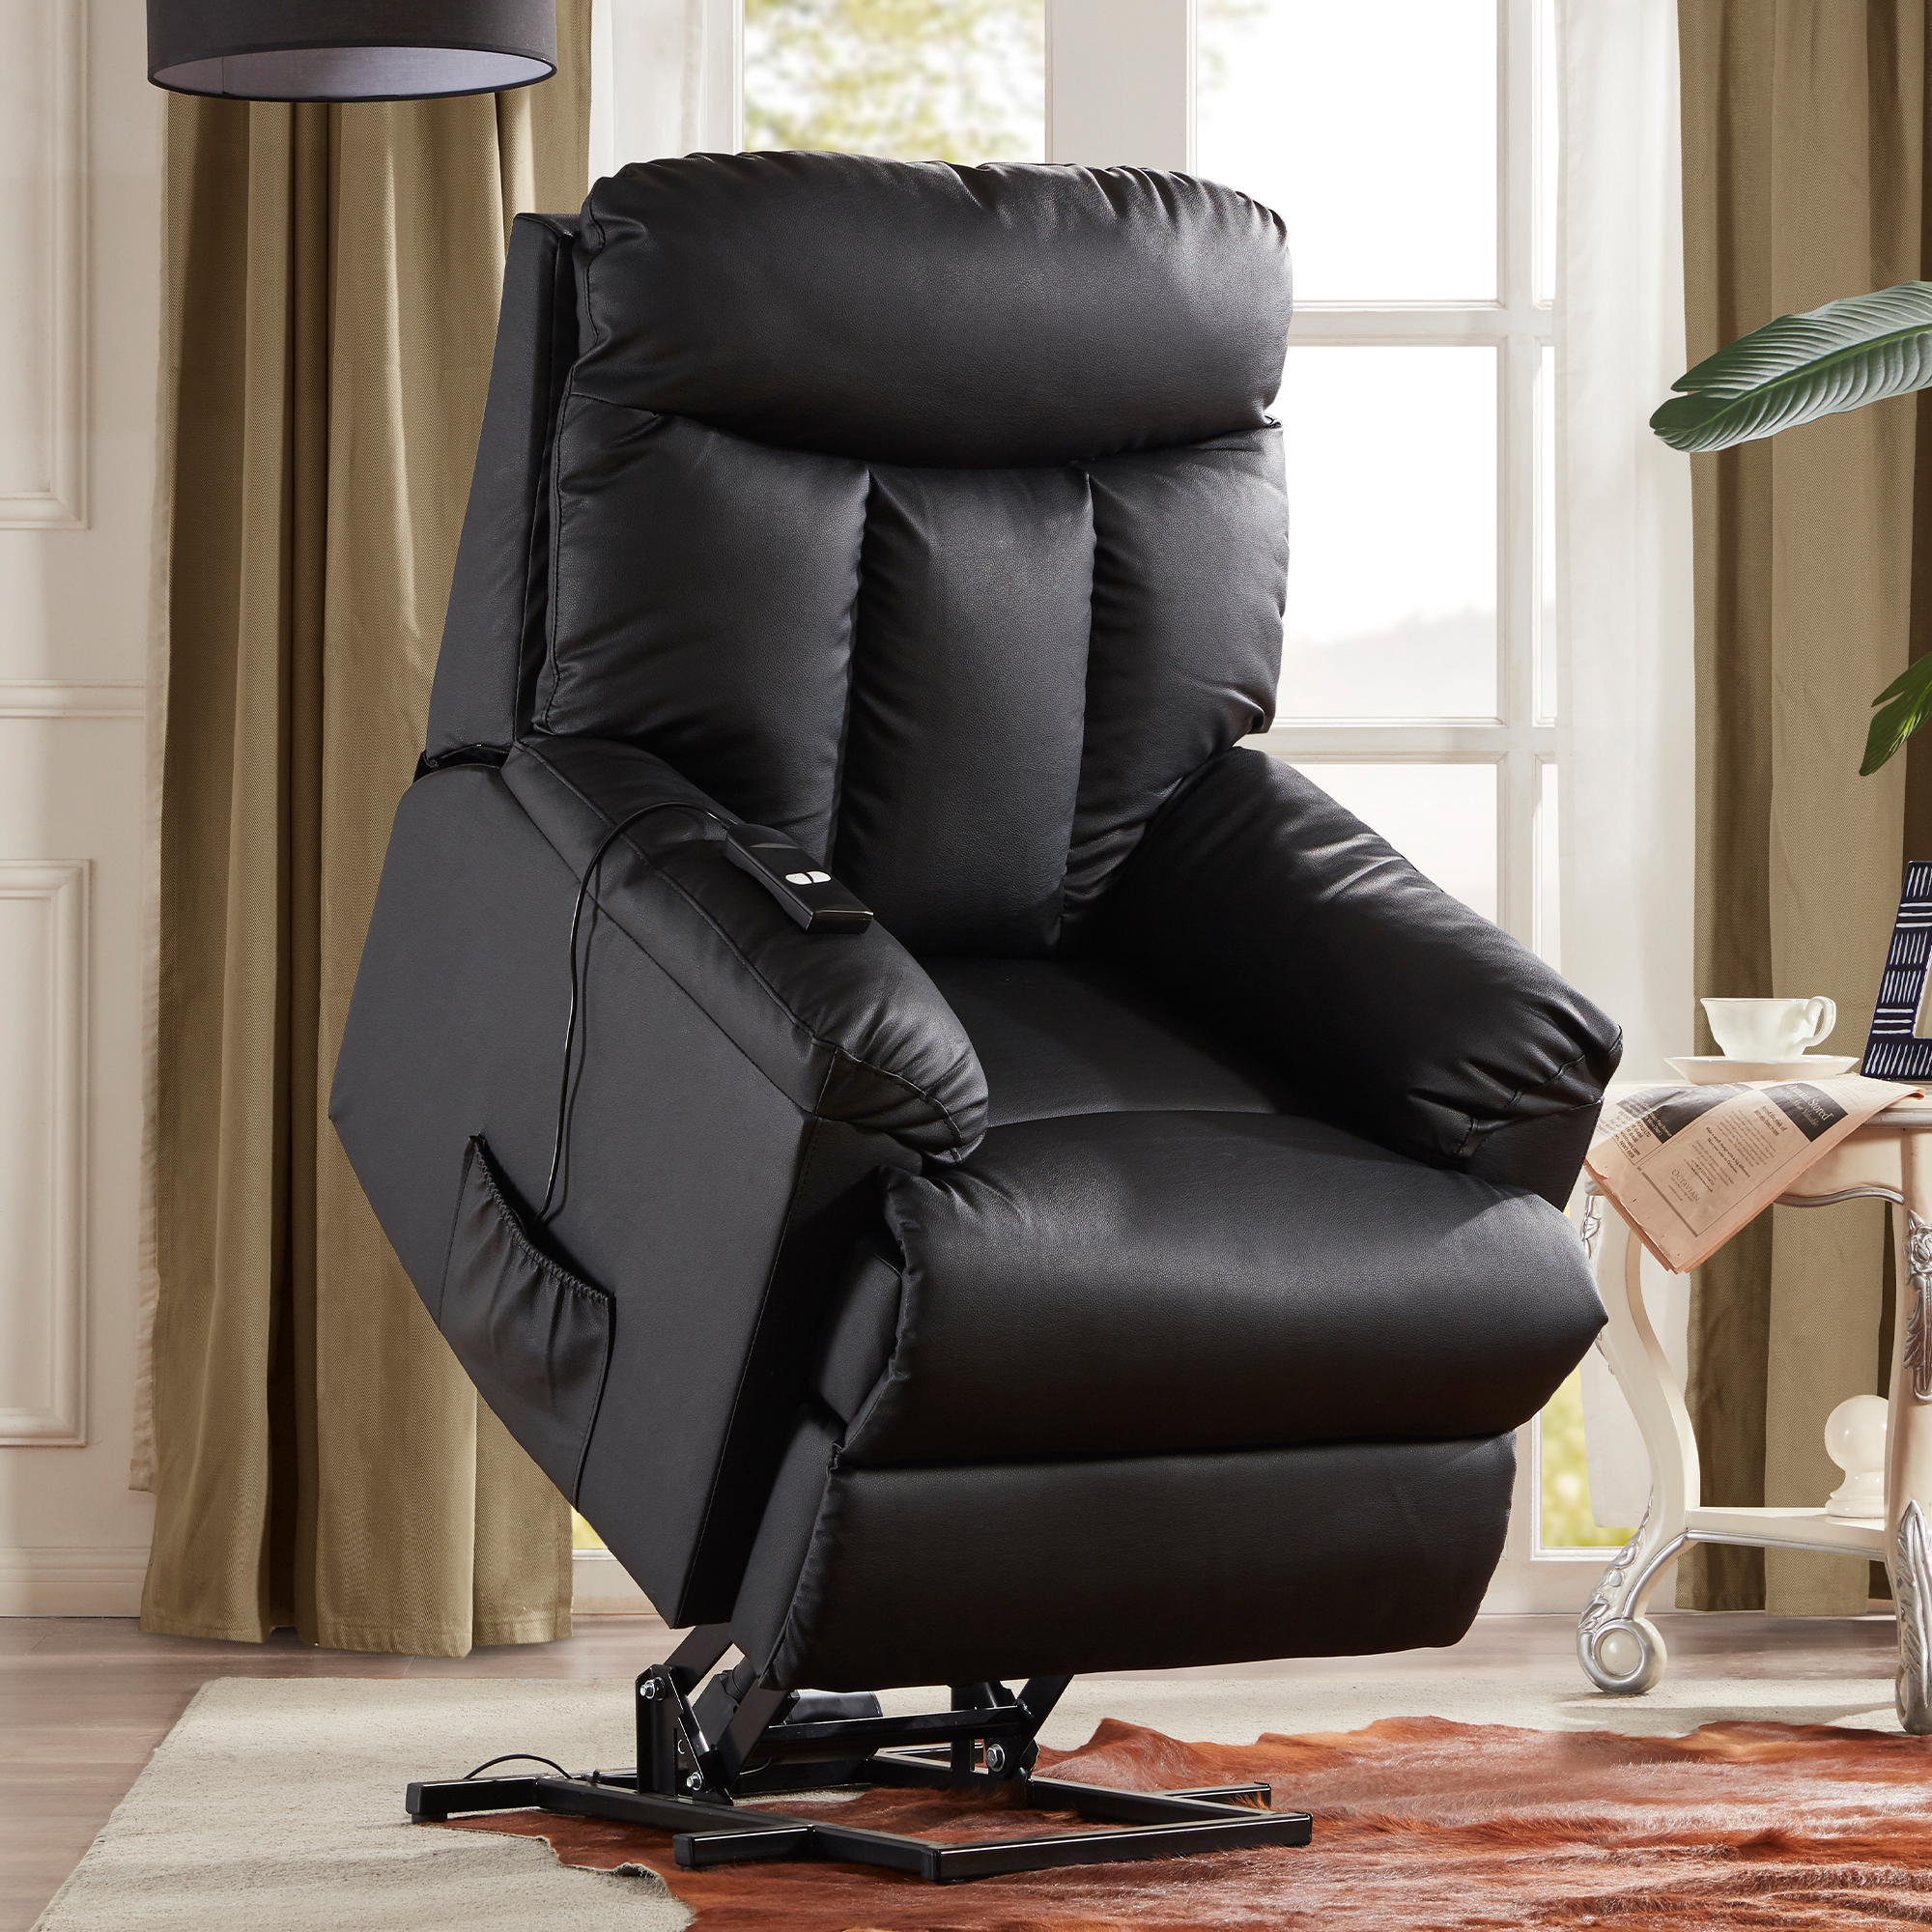 Orisfur. Lift Chair and Power PU Leather Living Room Heavy Duty Reclining Mechanism-CASAINC